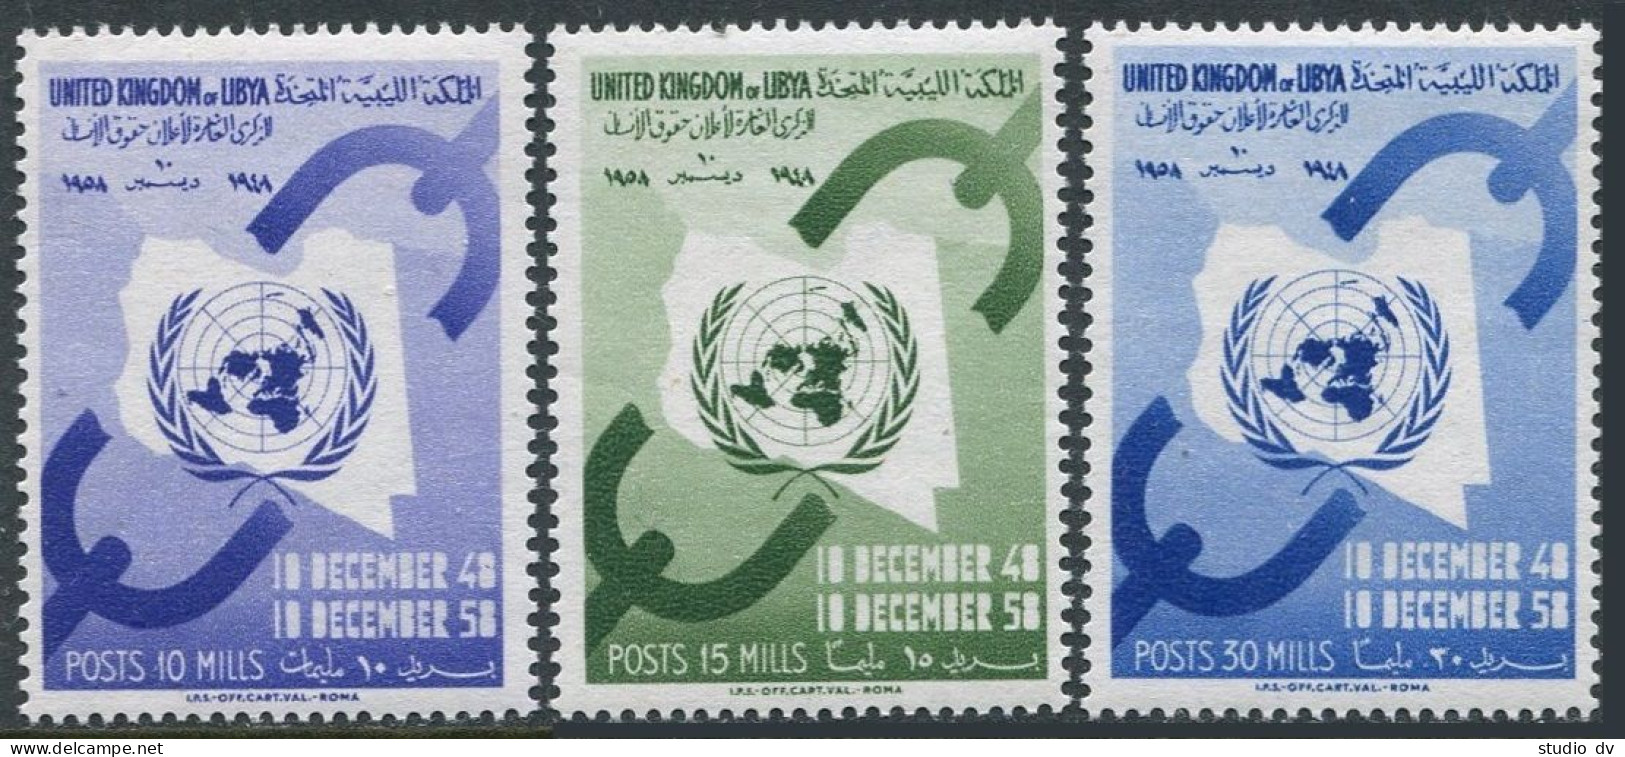 Libya 180-182, MNH. Michel 77-81. Declaration Of Human Rights, 10th Ann. 1958. - Libyen